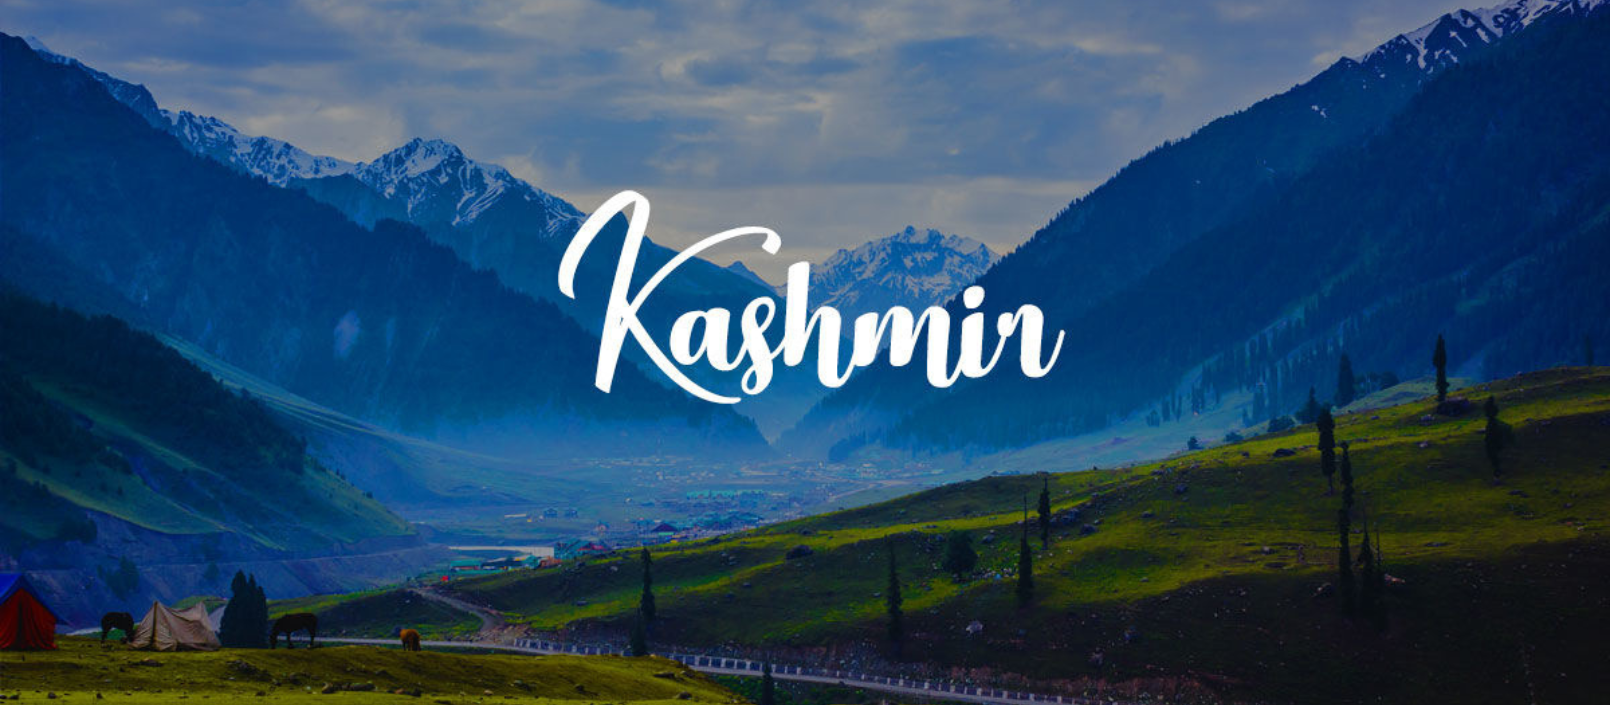 Jammu-Kashmir Tour, Kashmir: